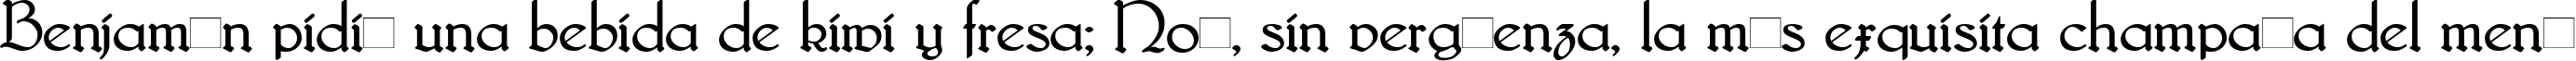 Пример написания шрифтом Bridgnorth текста на испанском